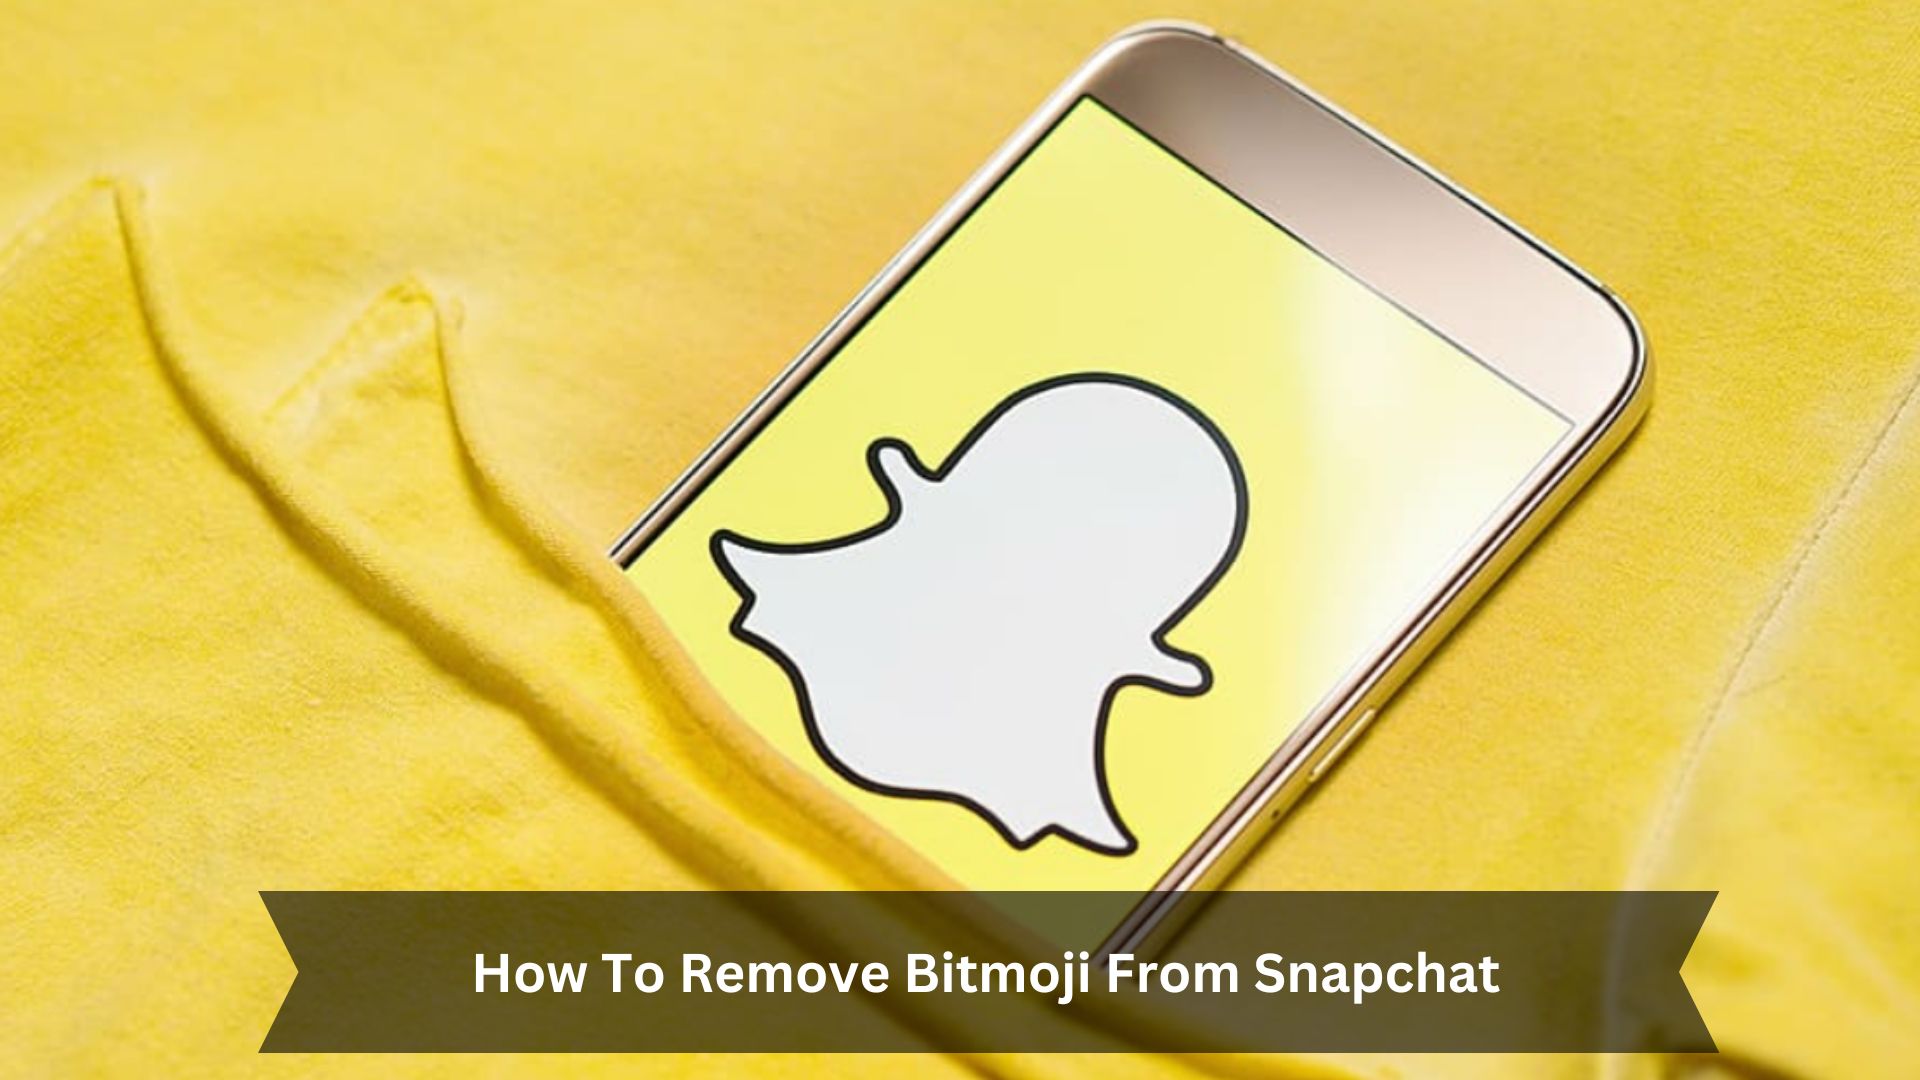 How To Remove Bitmoji From Snapchat